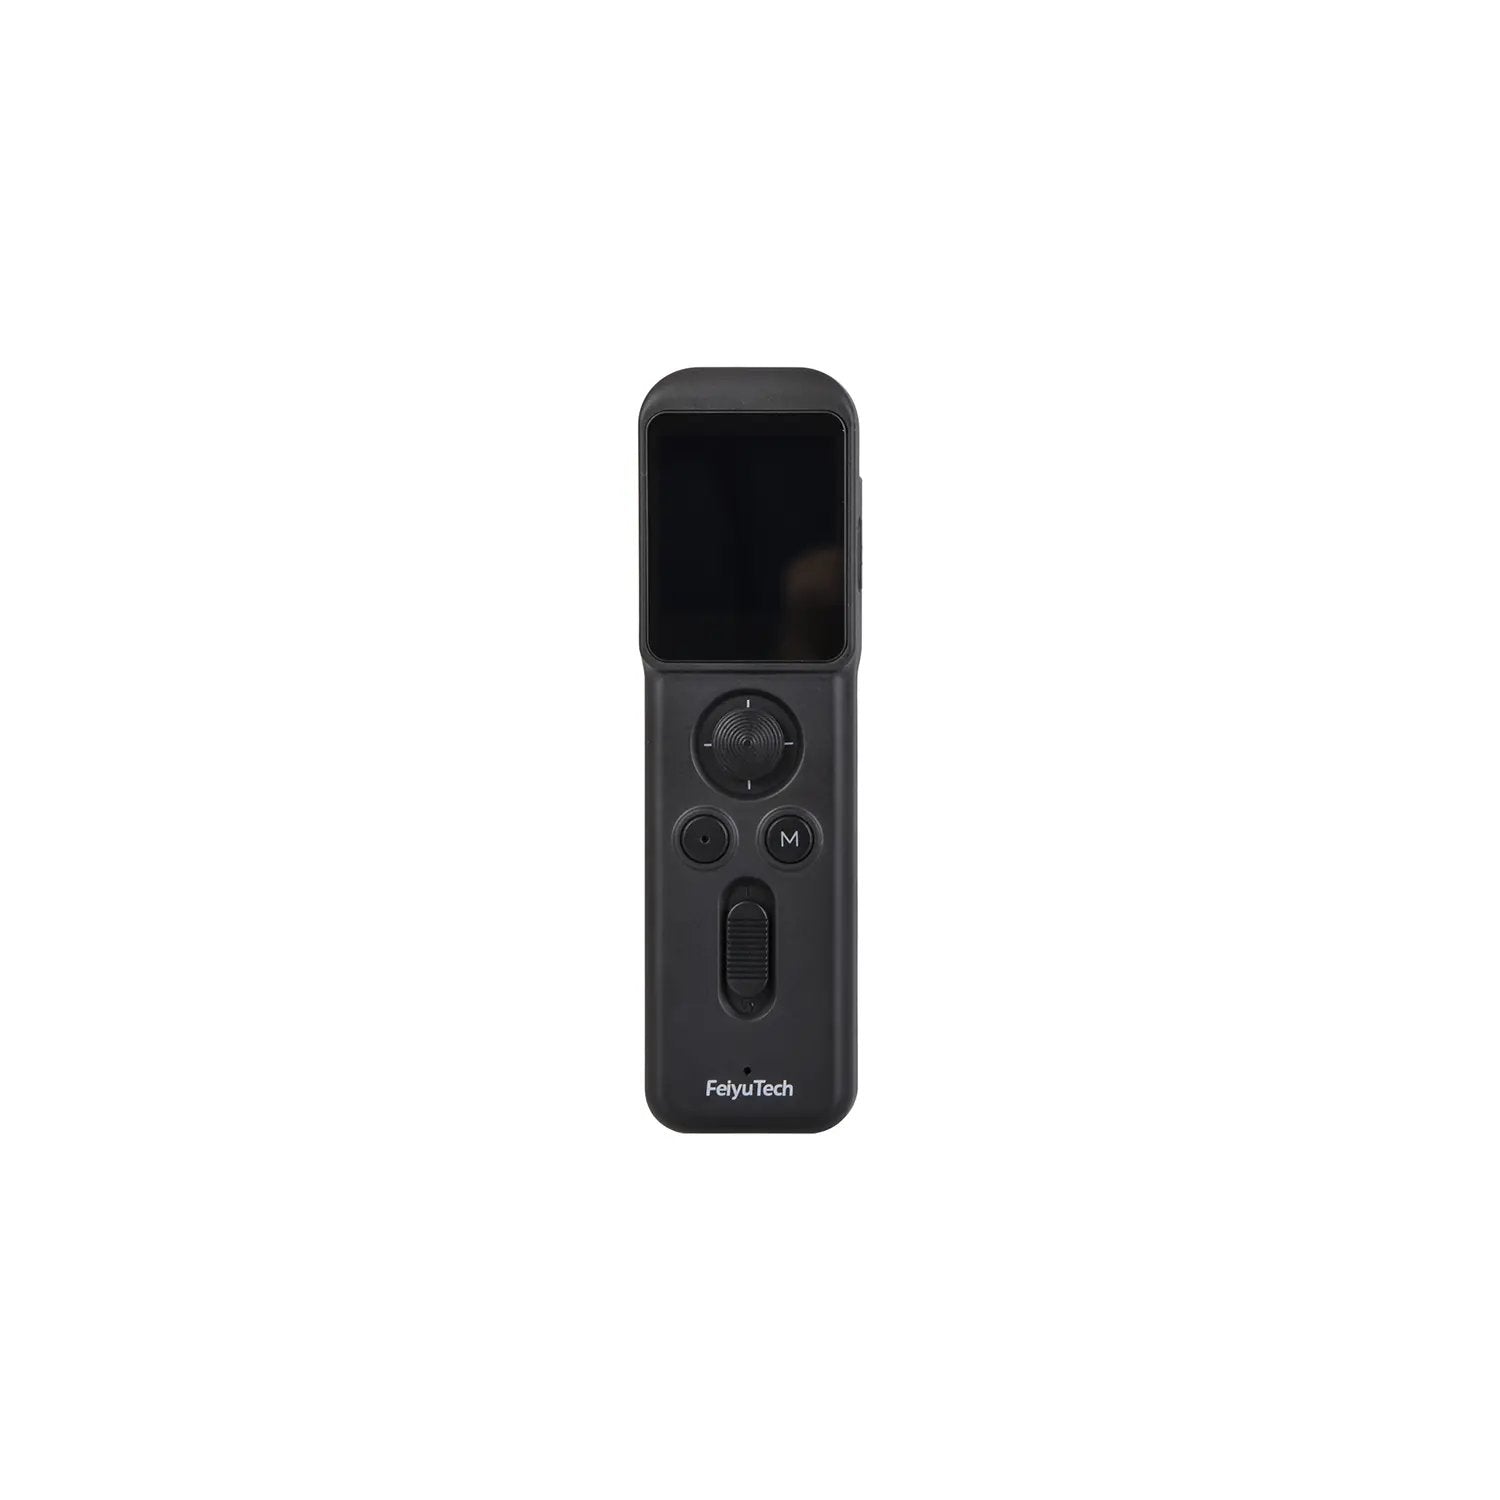 Feiyu pocket 3's remote handle